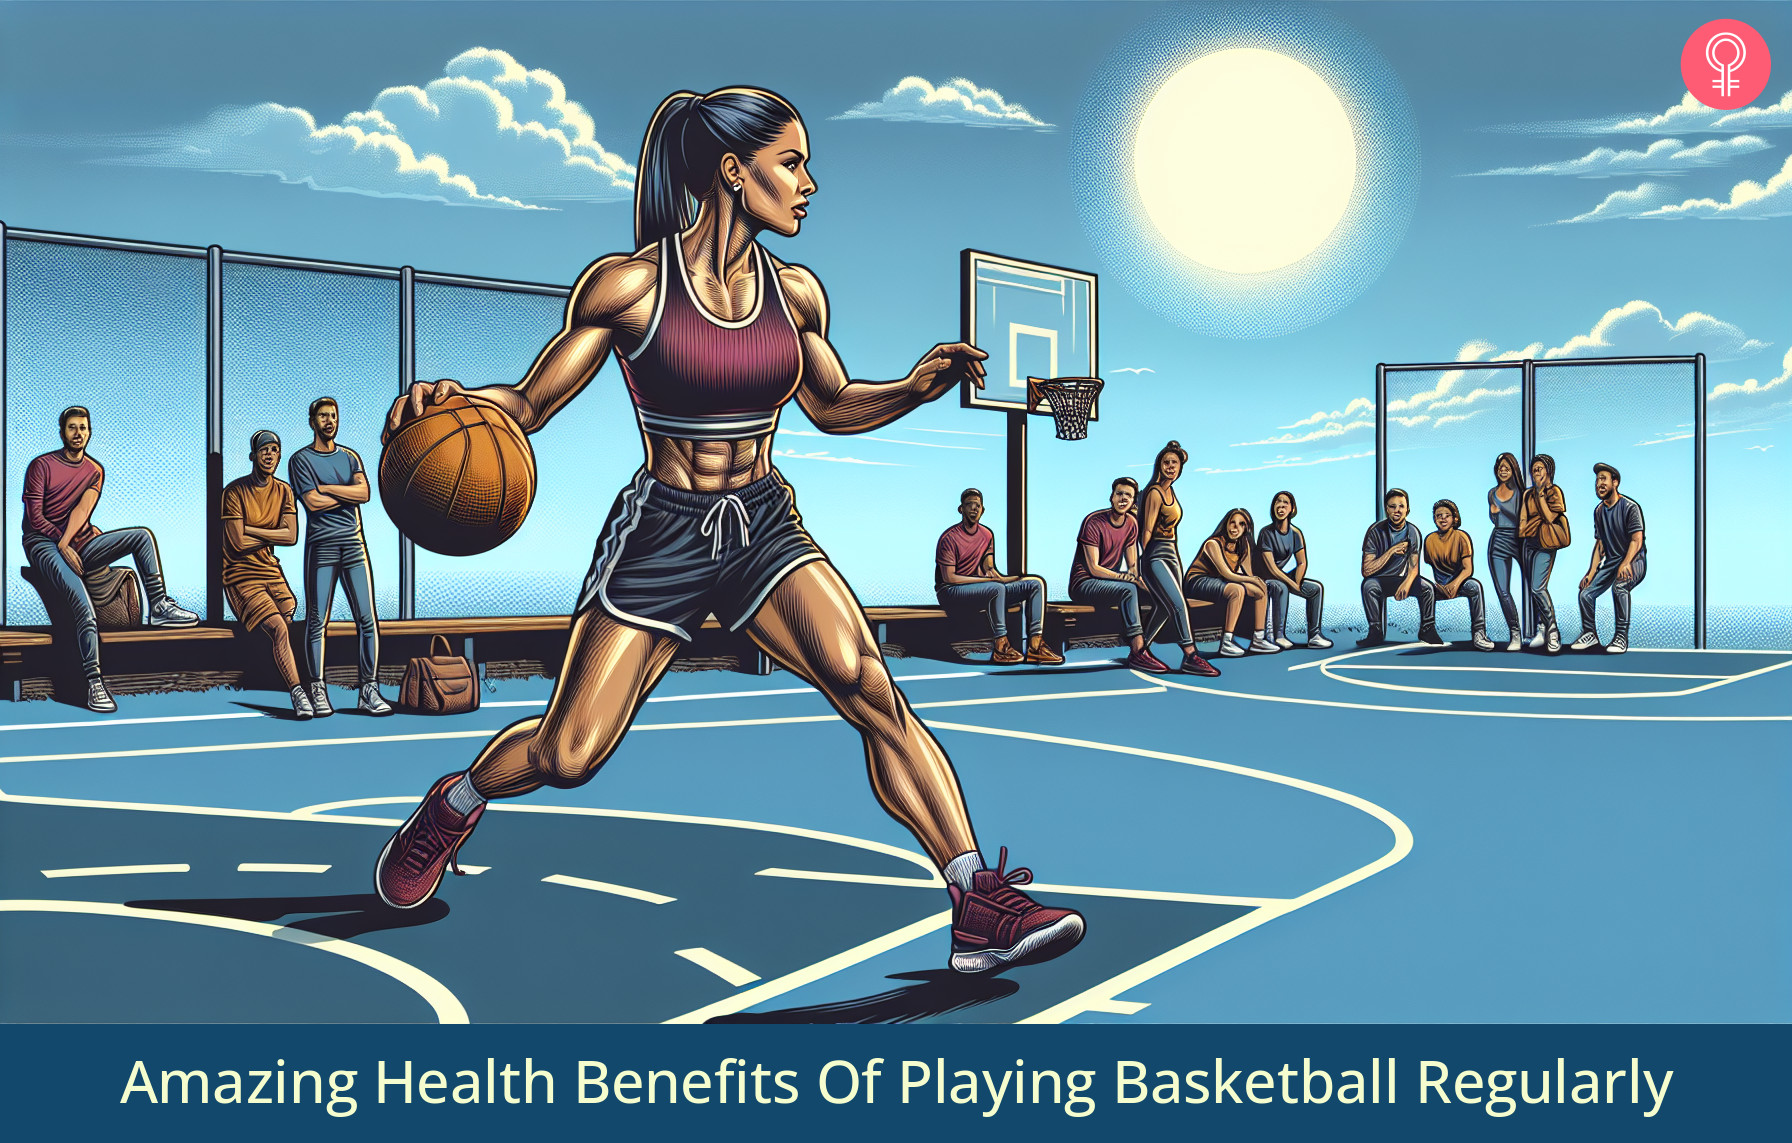 benefits of playing basketball